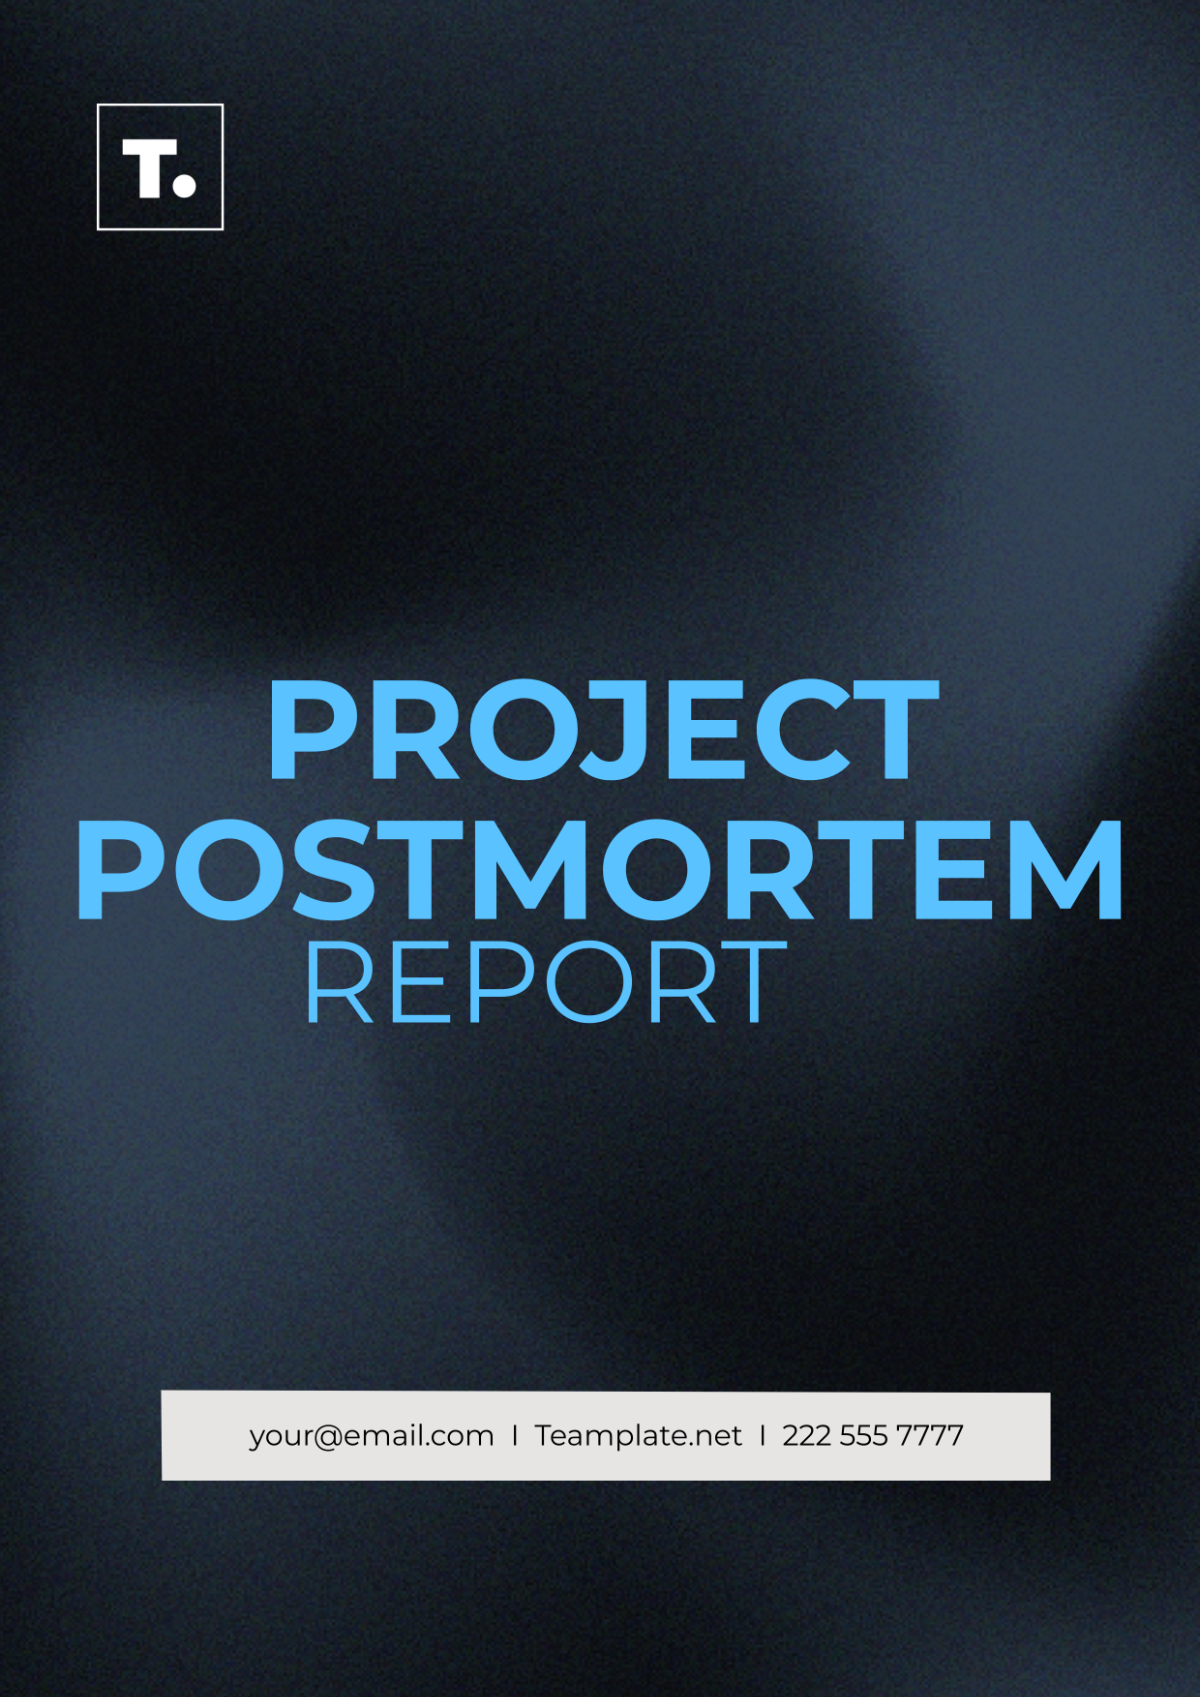 Project Postmortem Report Template